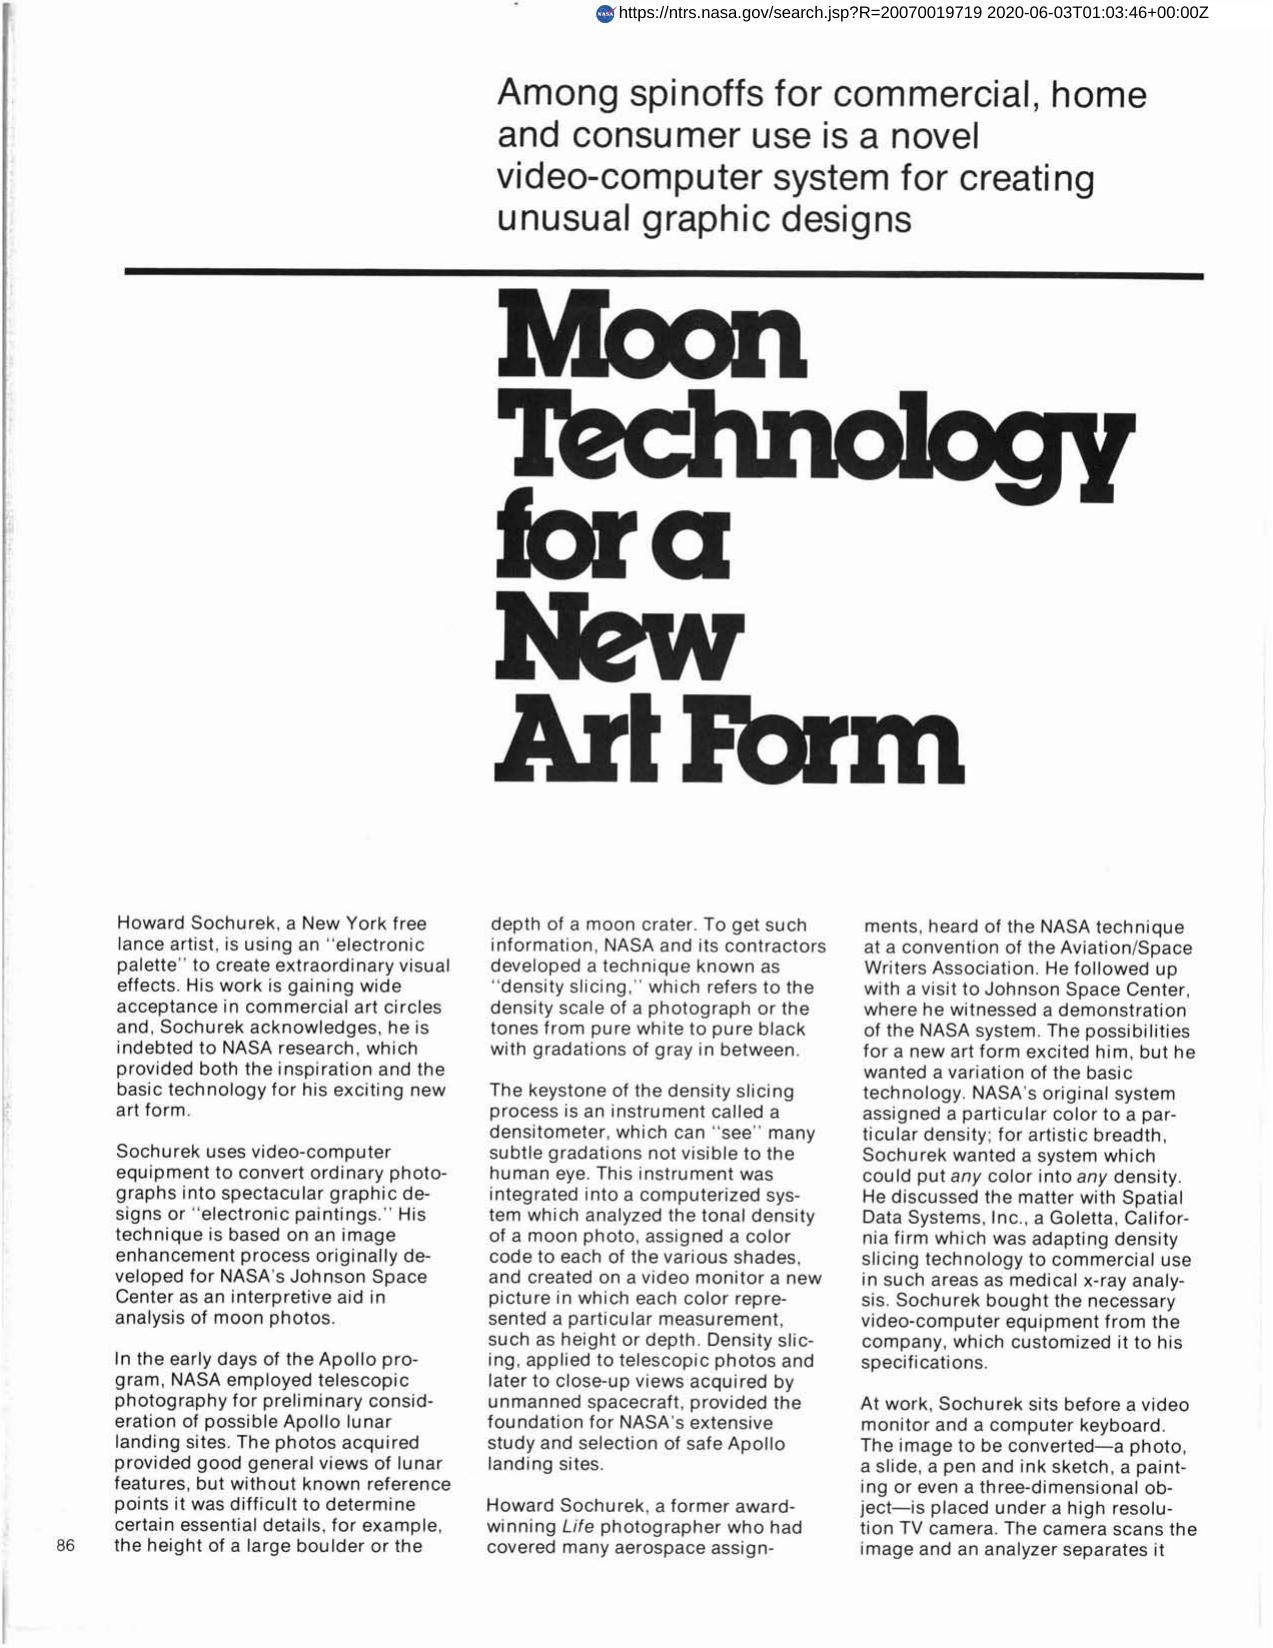 Moon Technology for a New Artform